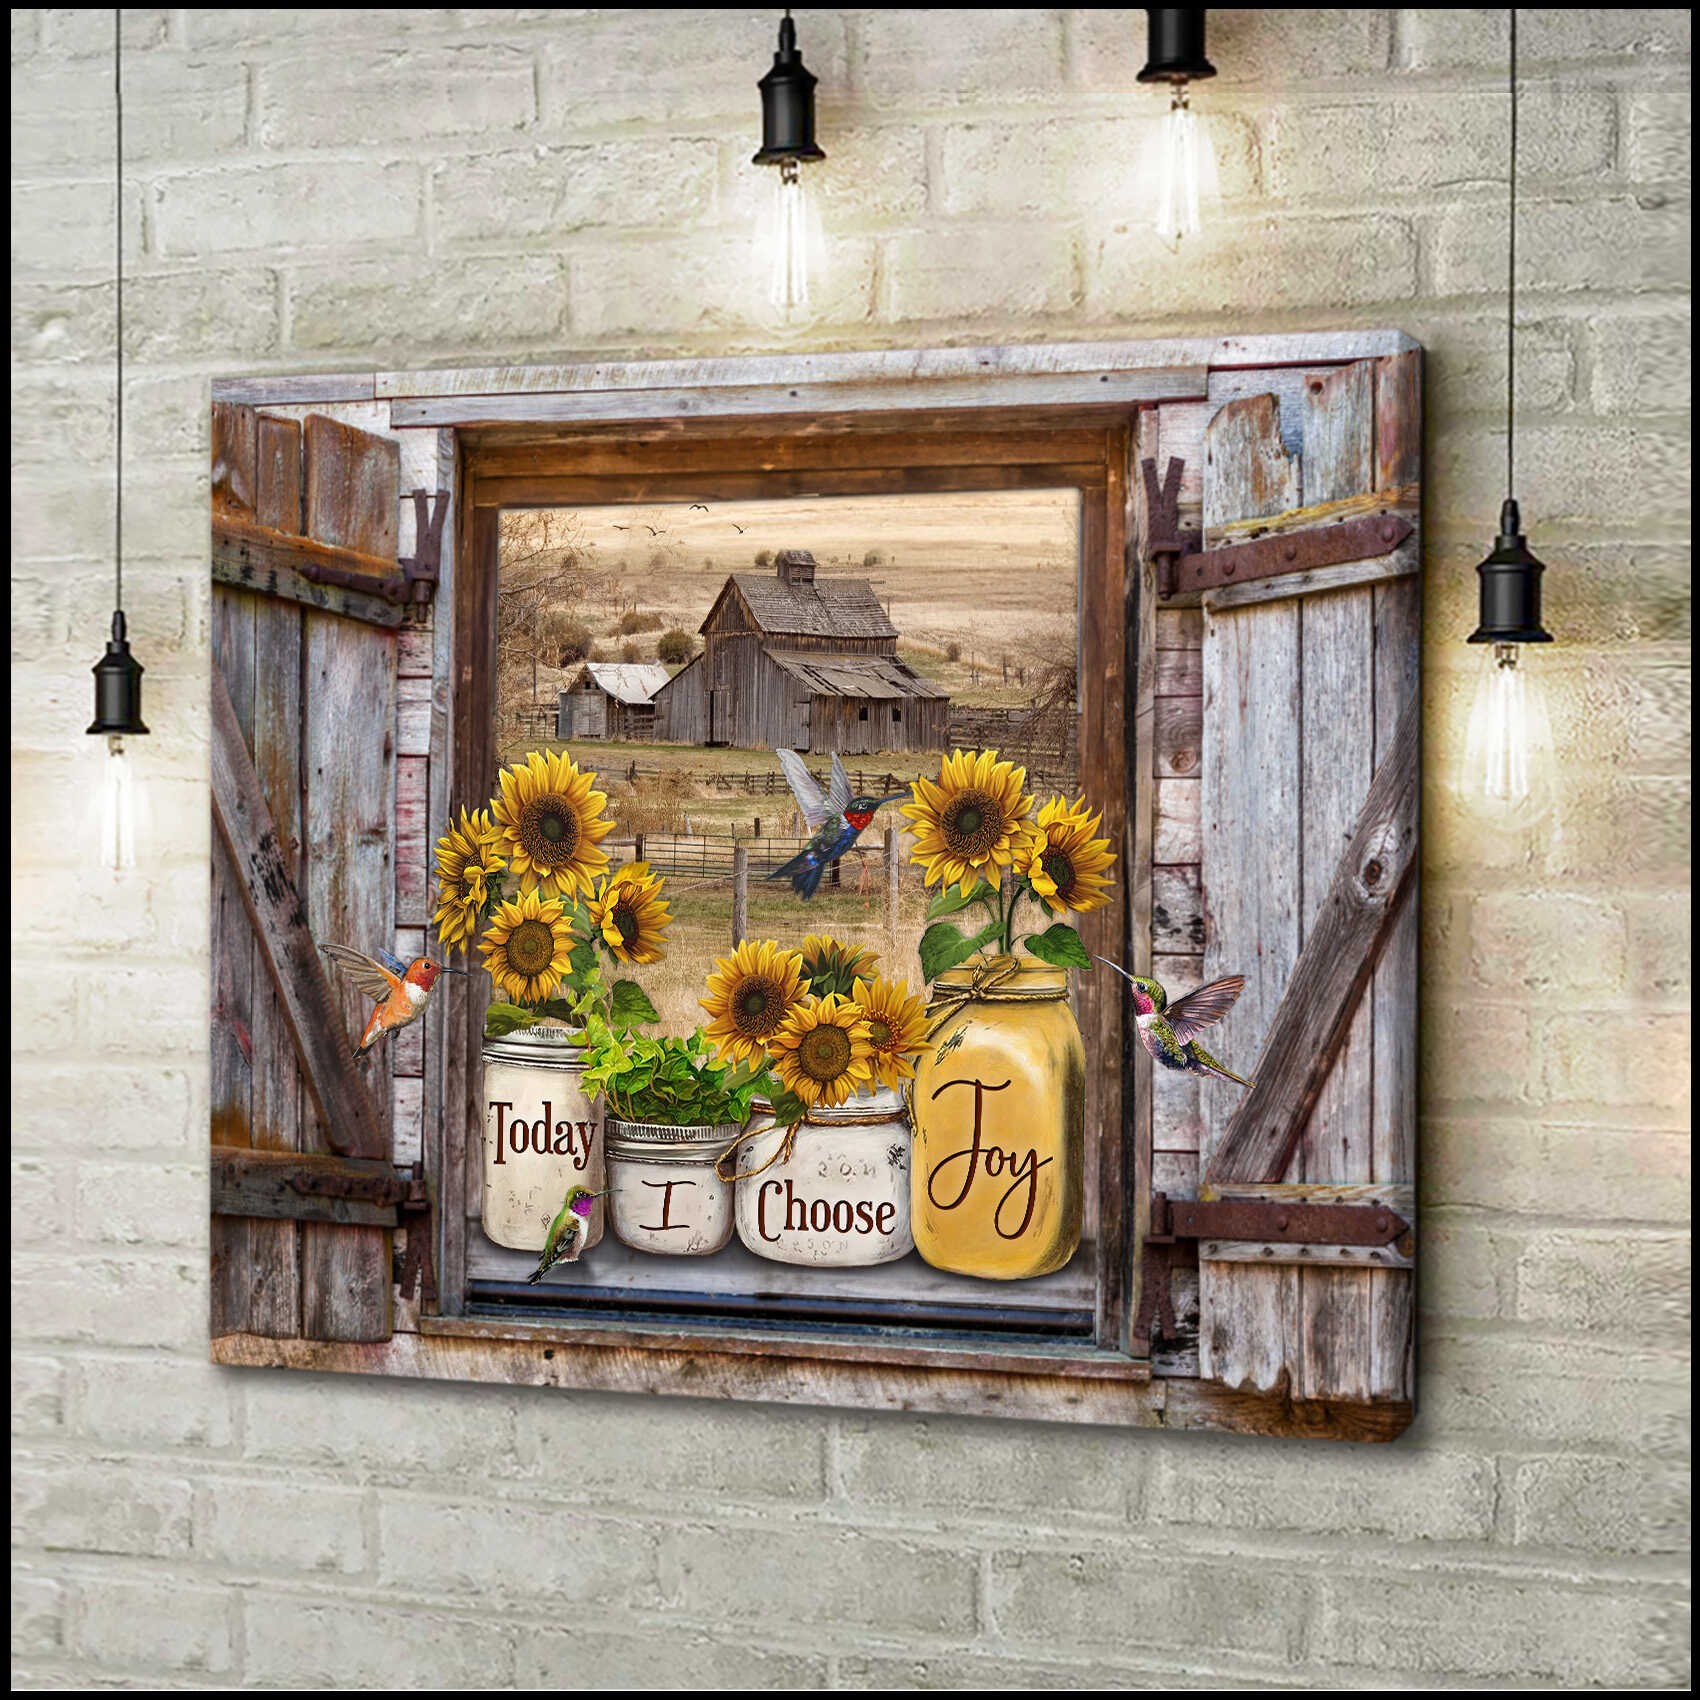 Hummingbirds Sunflower Mason Jars On Rustic Window Sill Barn View Today I Choose Joy Canvas Prints Wall Art Decor